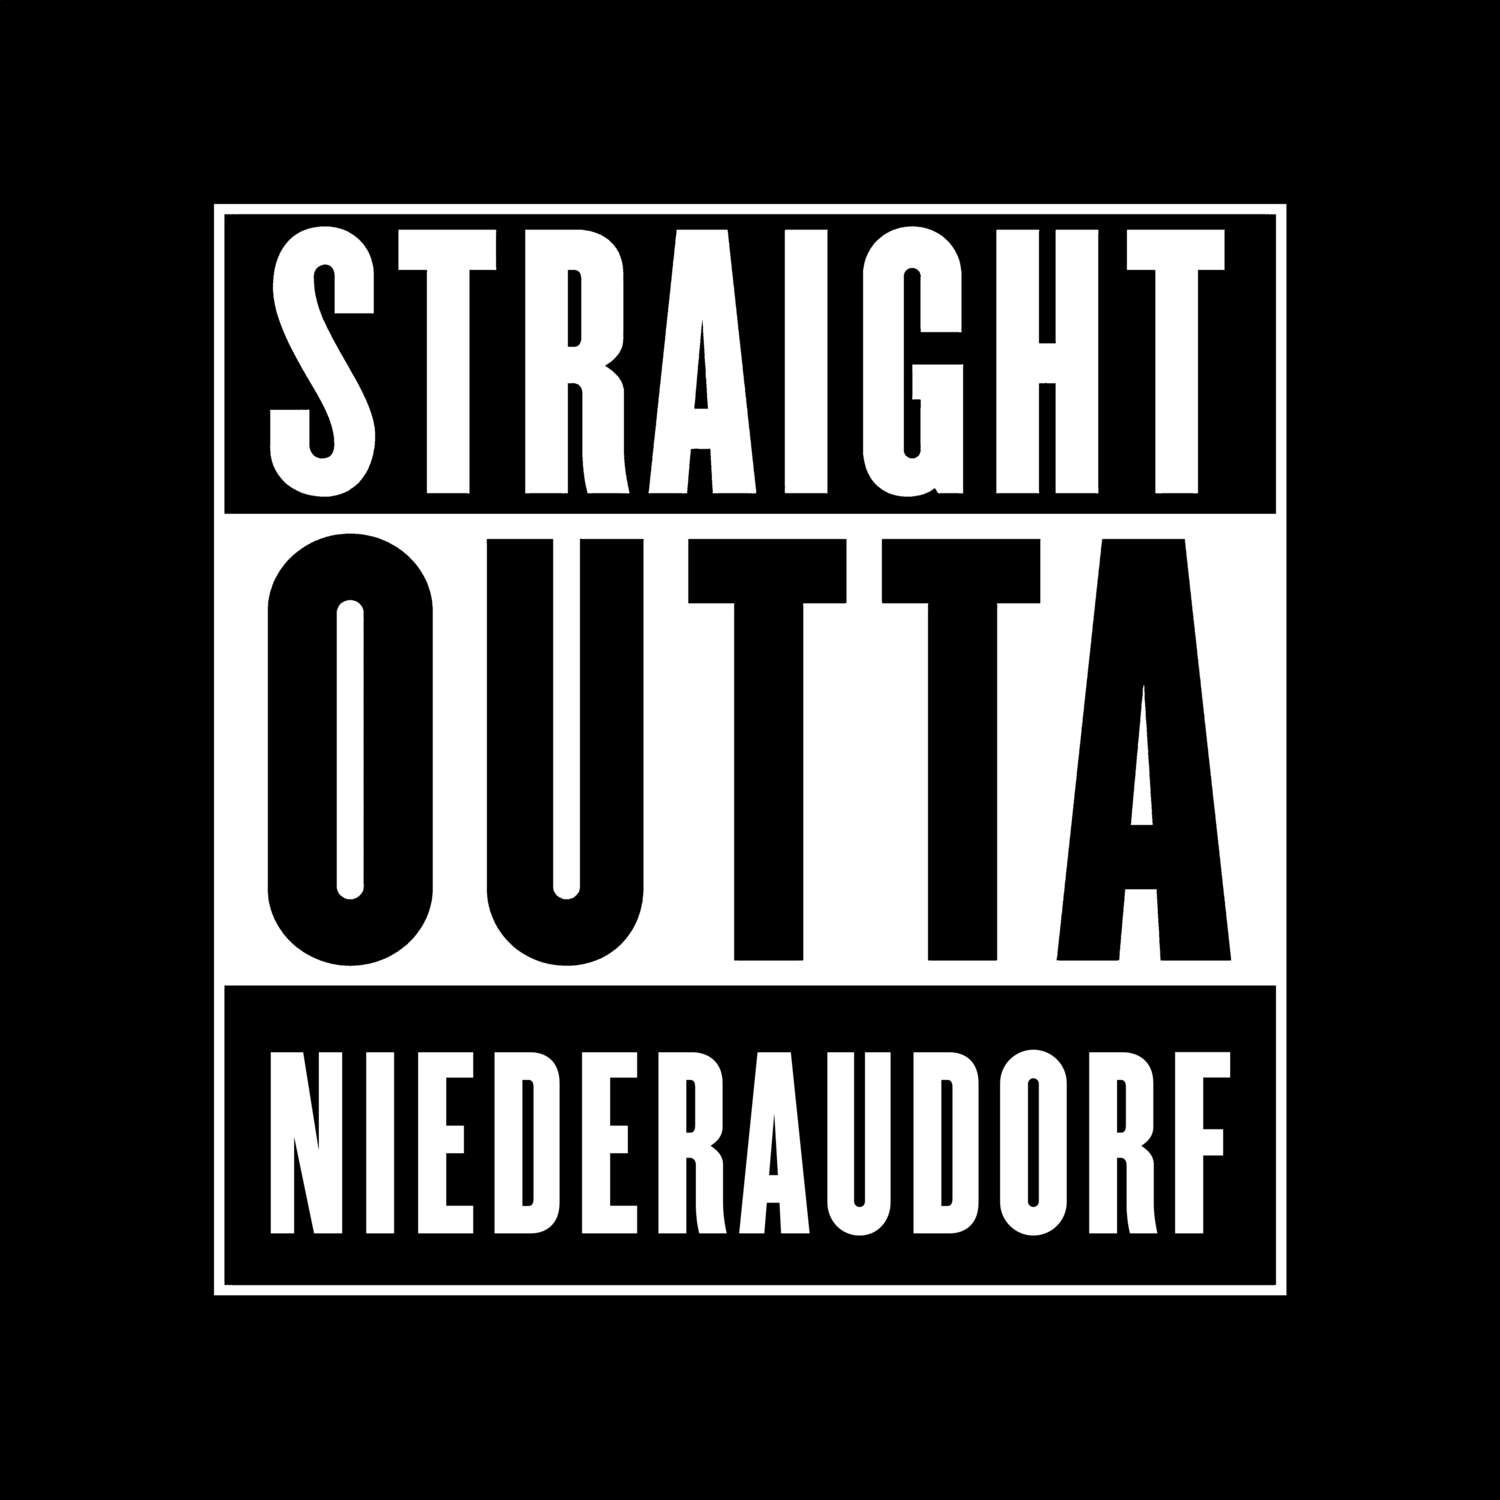 Niederaudorf T-Shirt »Straight Outta«